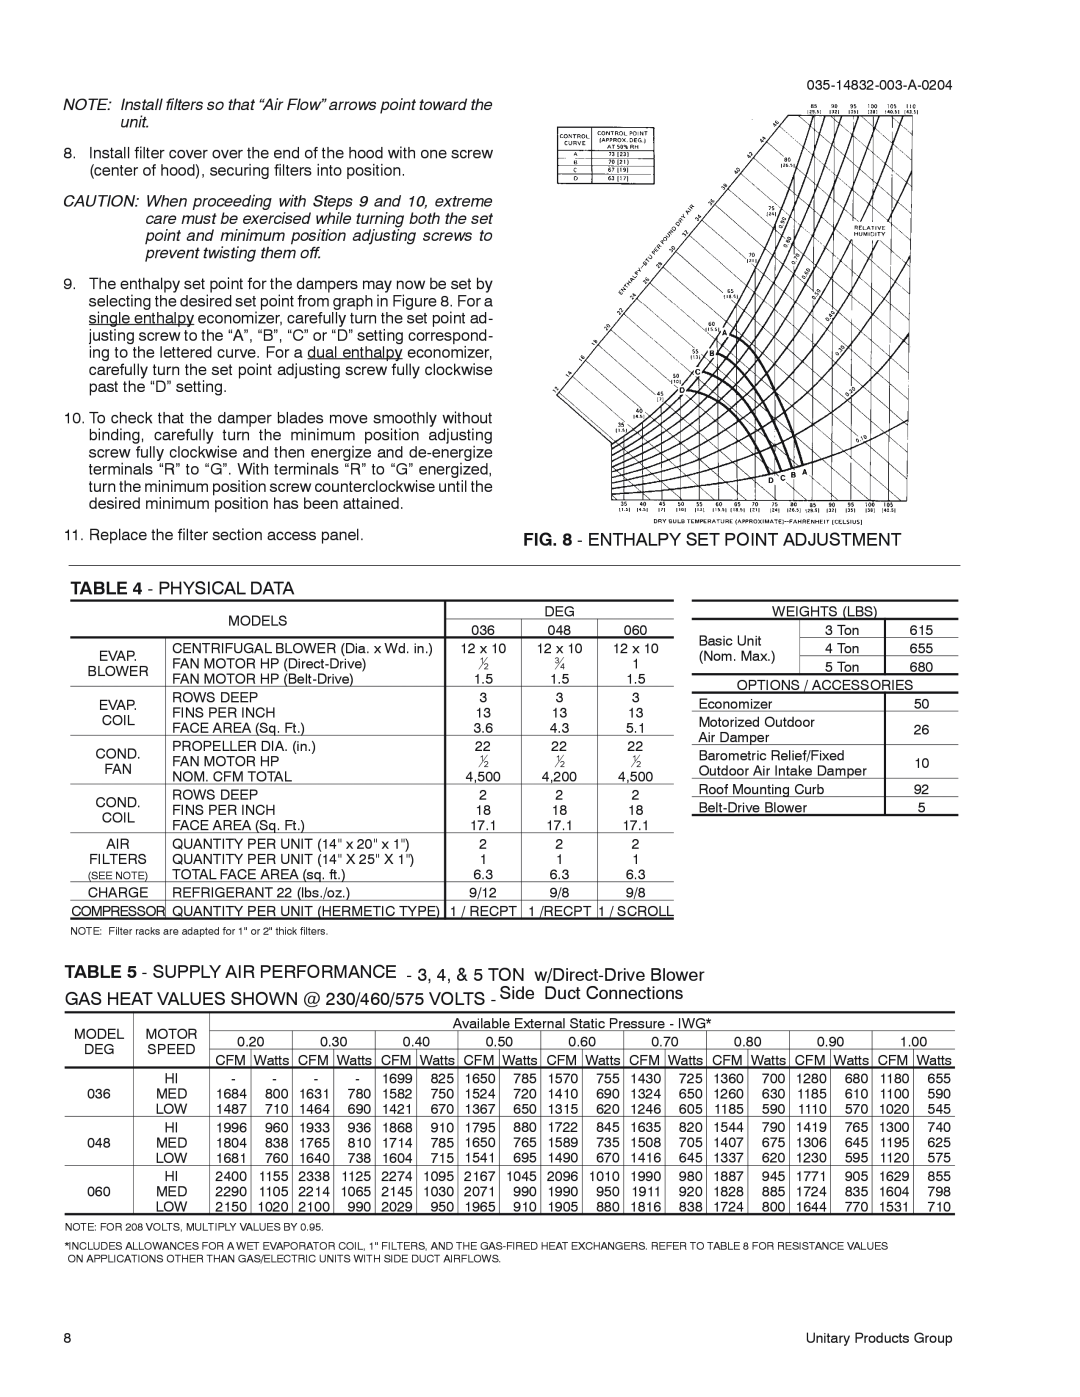 York D2EG 048, D3EG 036, D2EG 060 installation instructions Enthalpy Set Point Adjustment, Physical Data 